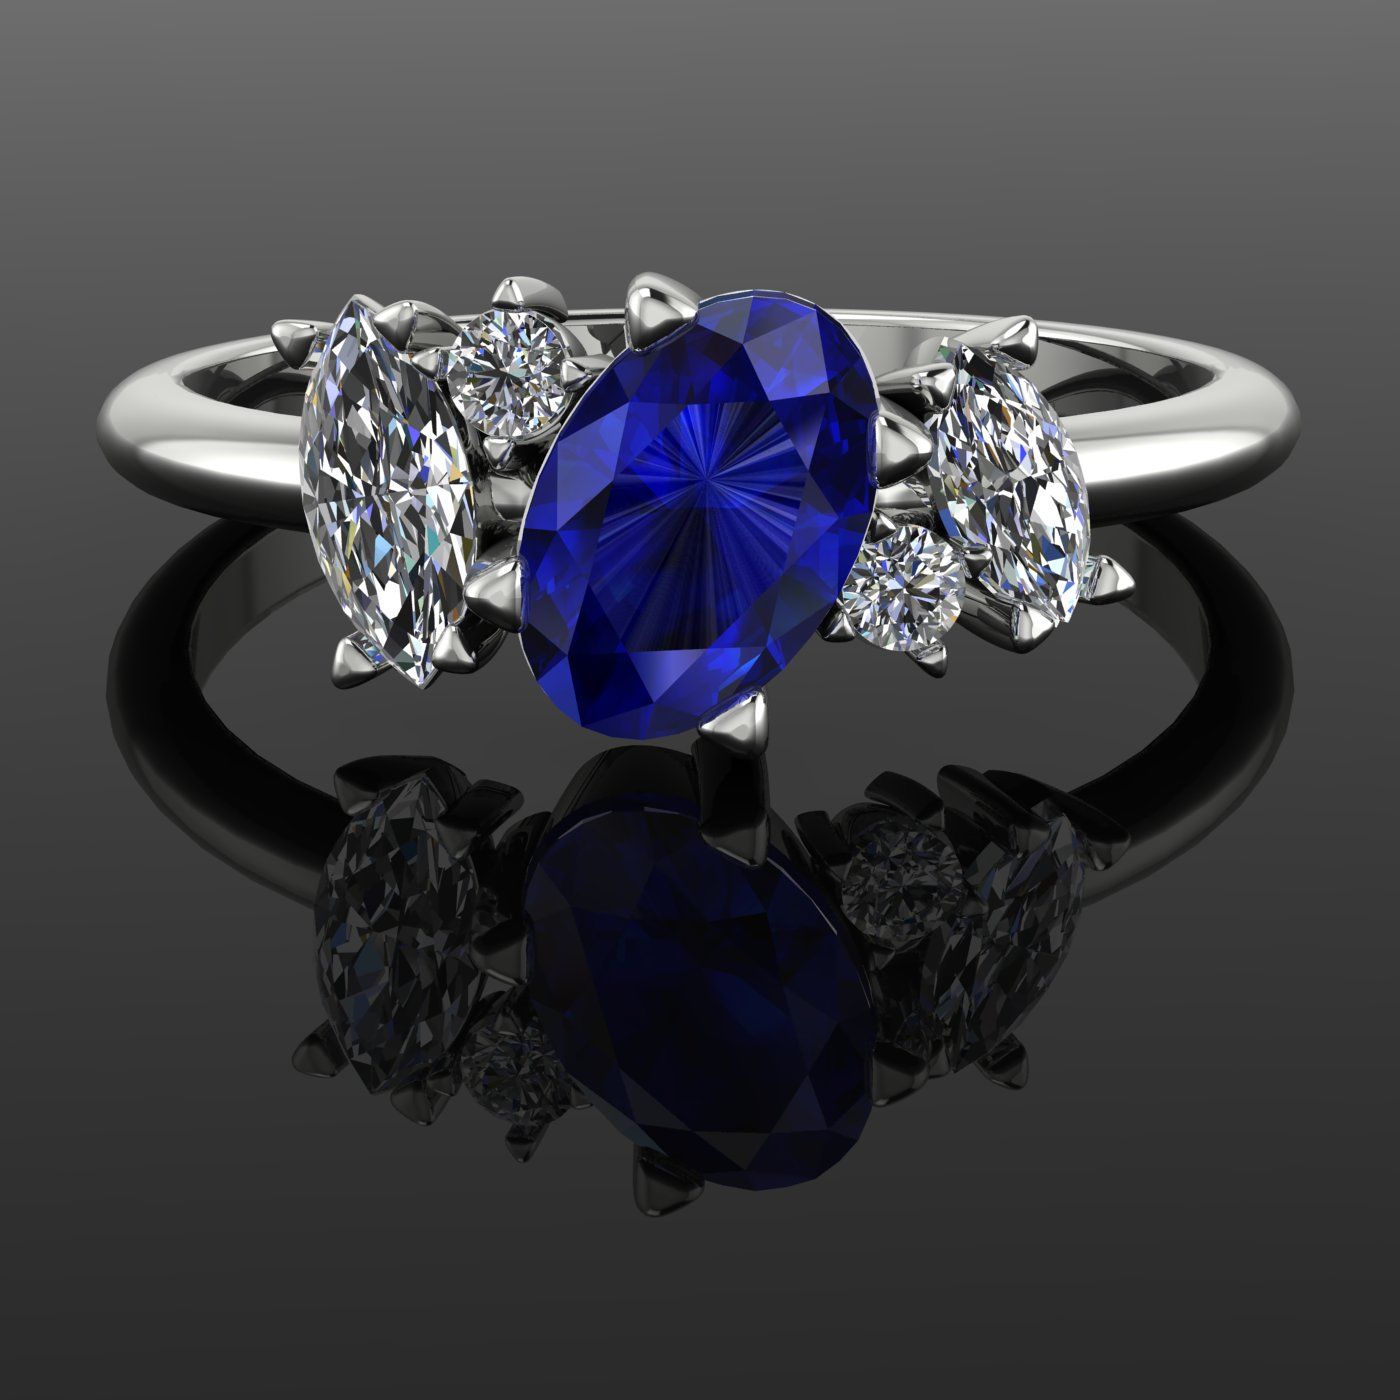 The Atlantis Asymmetrical Sapphire & Diamond Engagement Ring with sapphire and diamonds